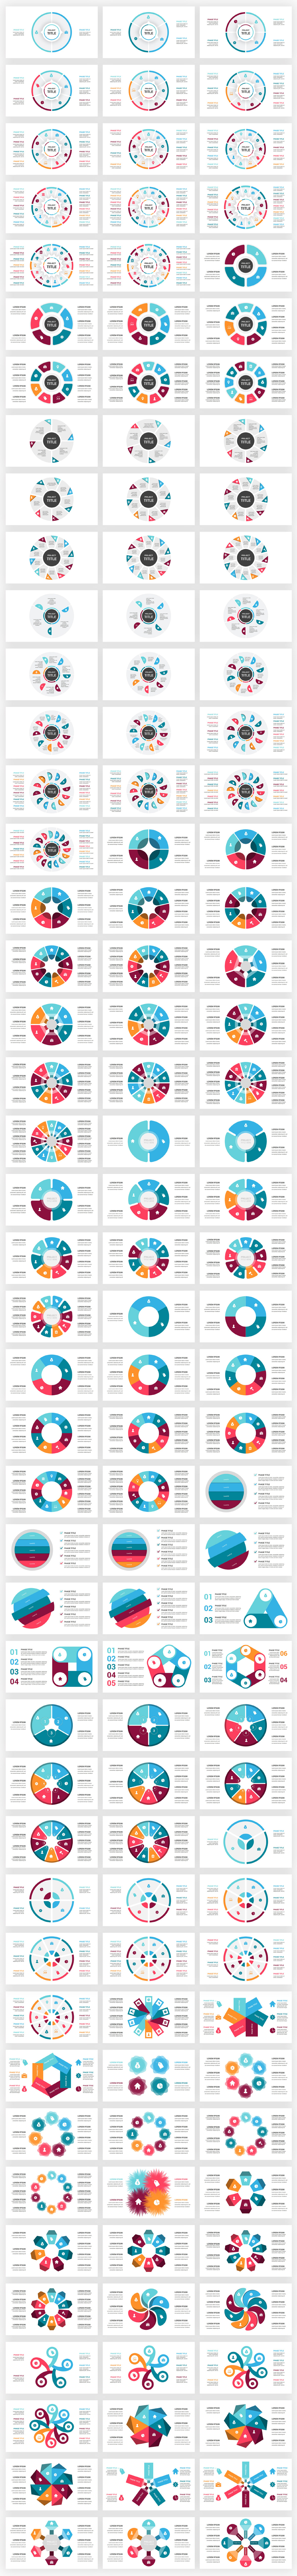 Infographics Complete Bundle PowerPoint Templates - 41